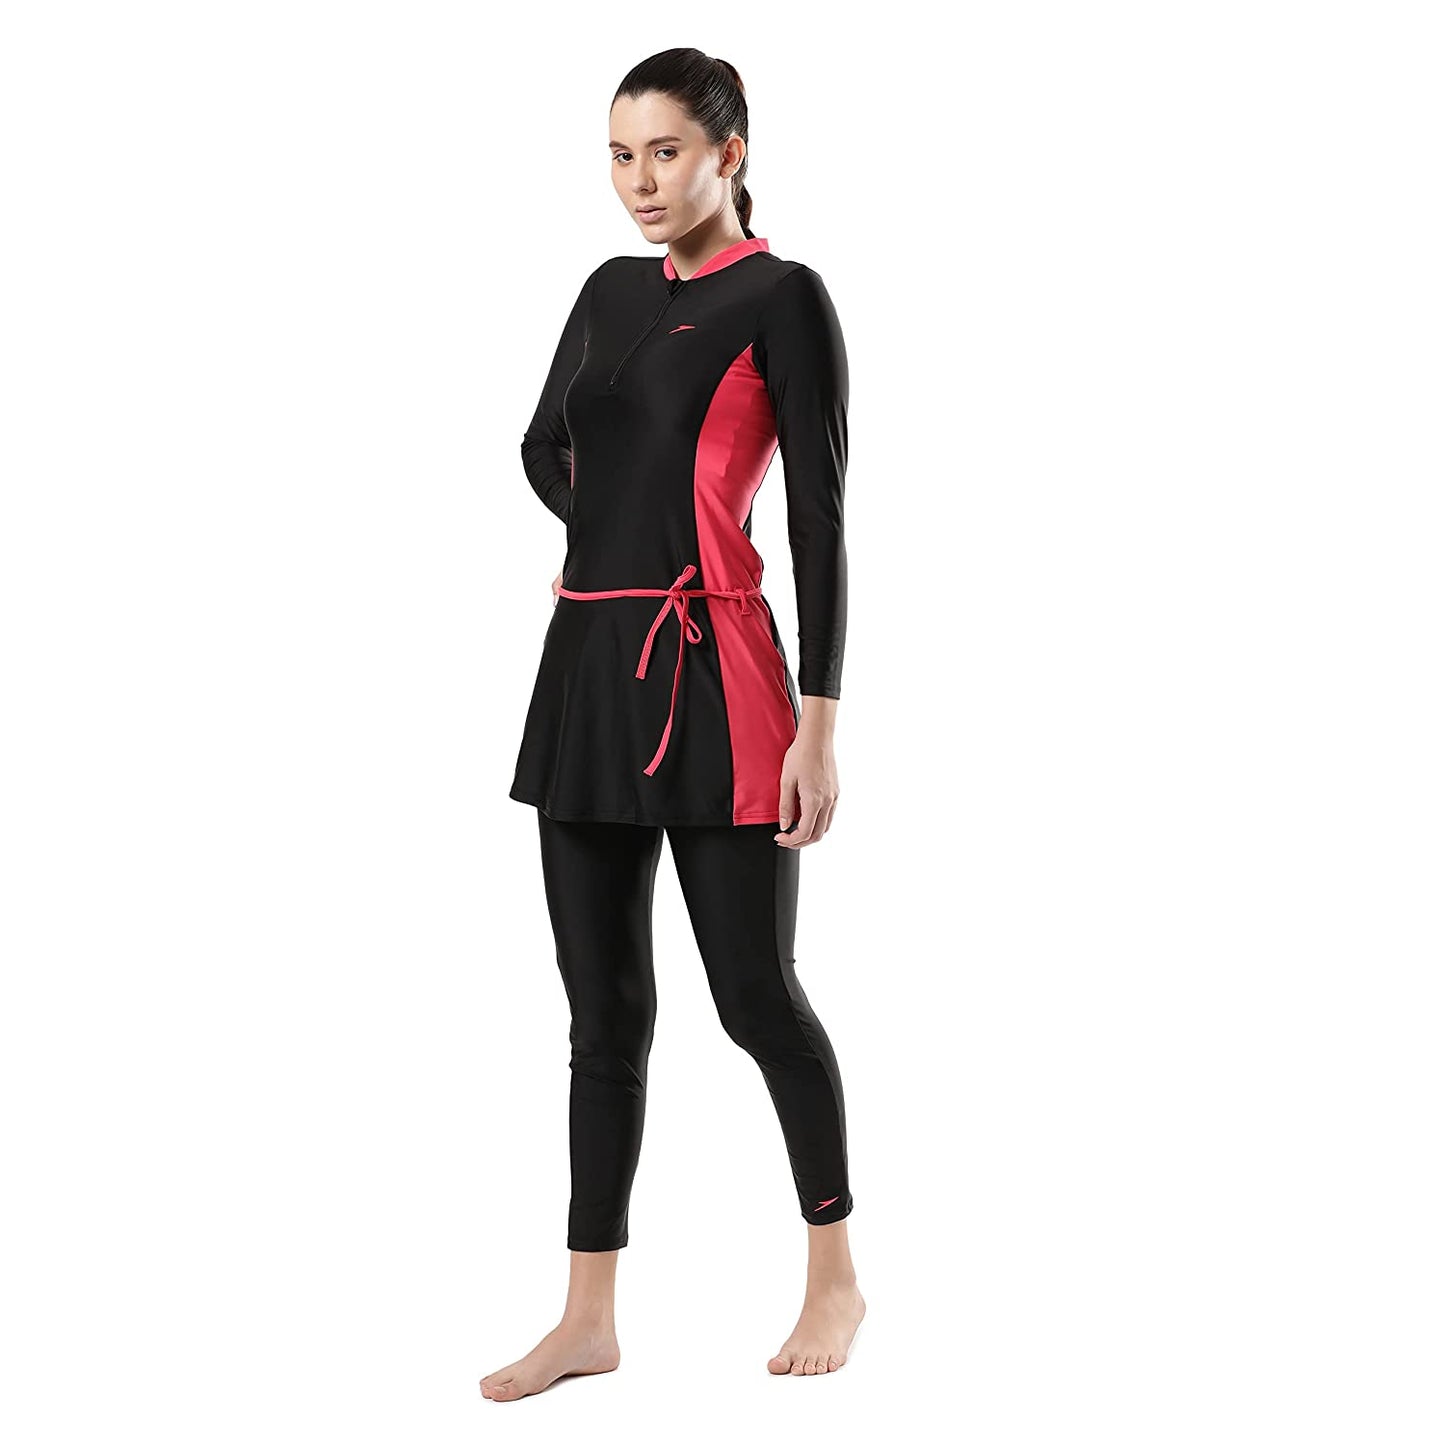 Speedo Female Two-Piece Full Body Suit For Women (Black/Raspberry Fill) - Best Price online Prokicksports.com